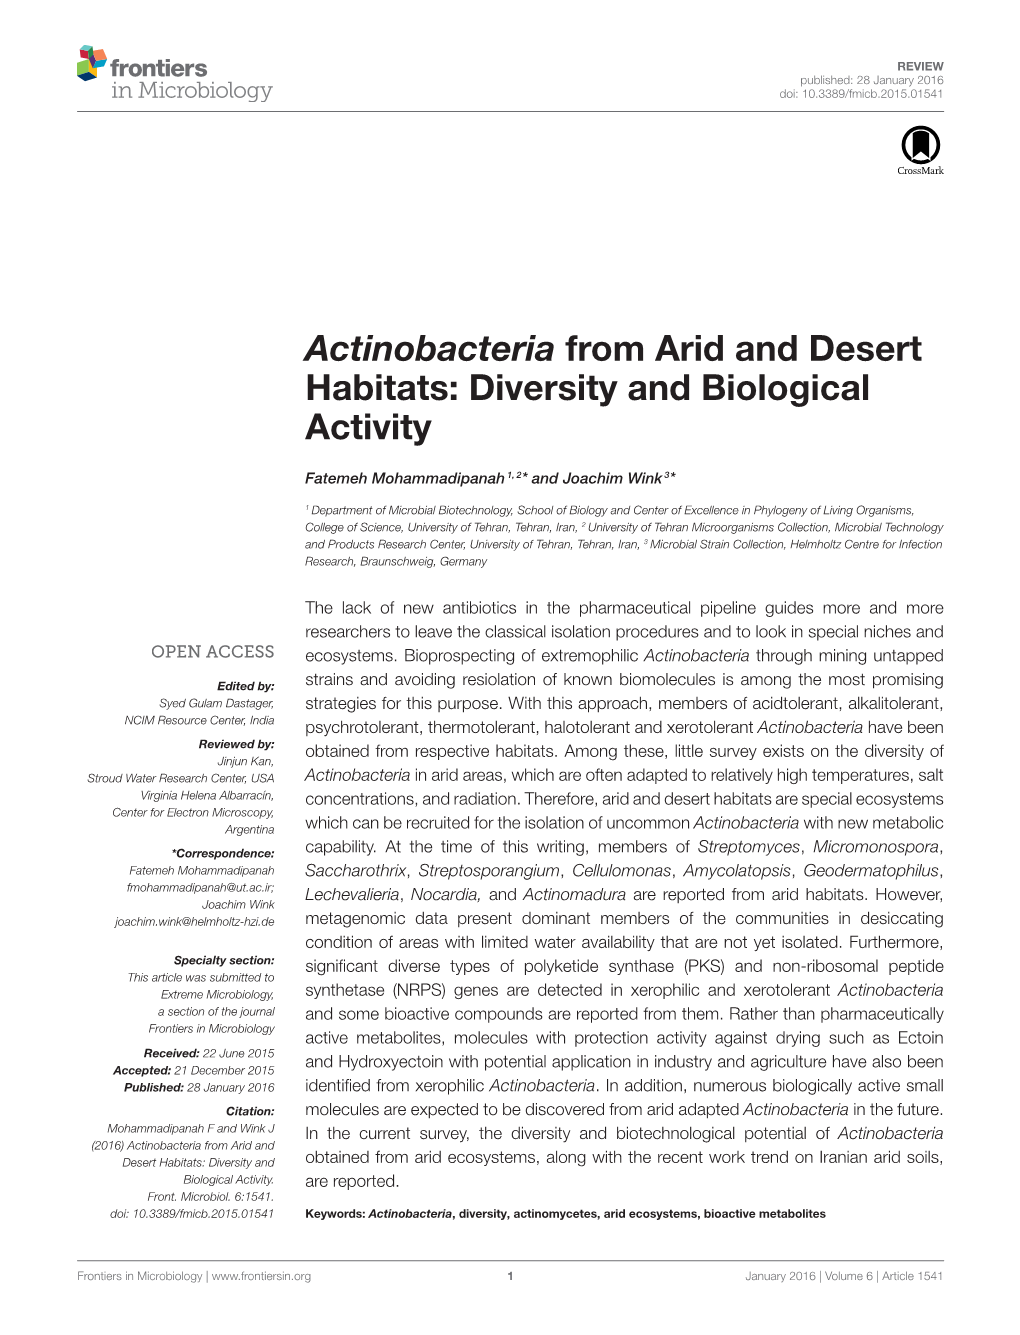 Actinobacteria from Arid and Desert Habitats: Diversity and Biological Activity